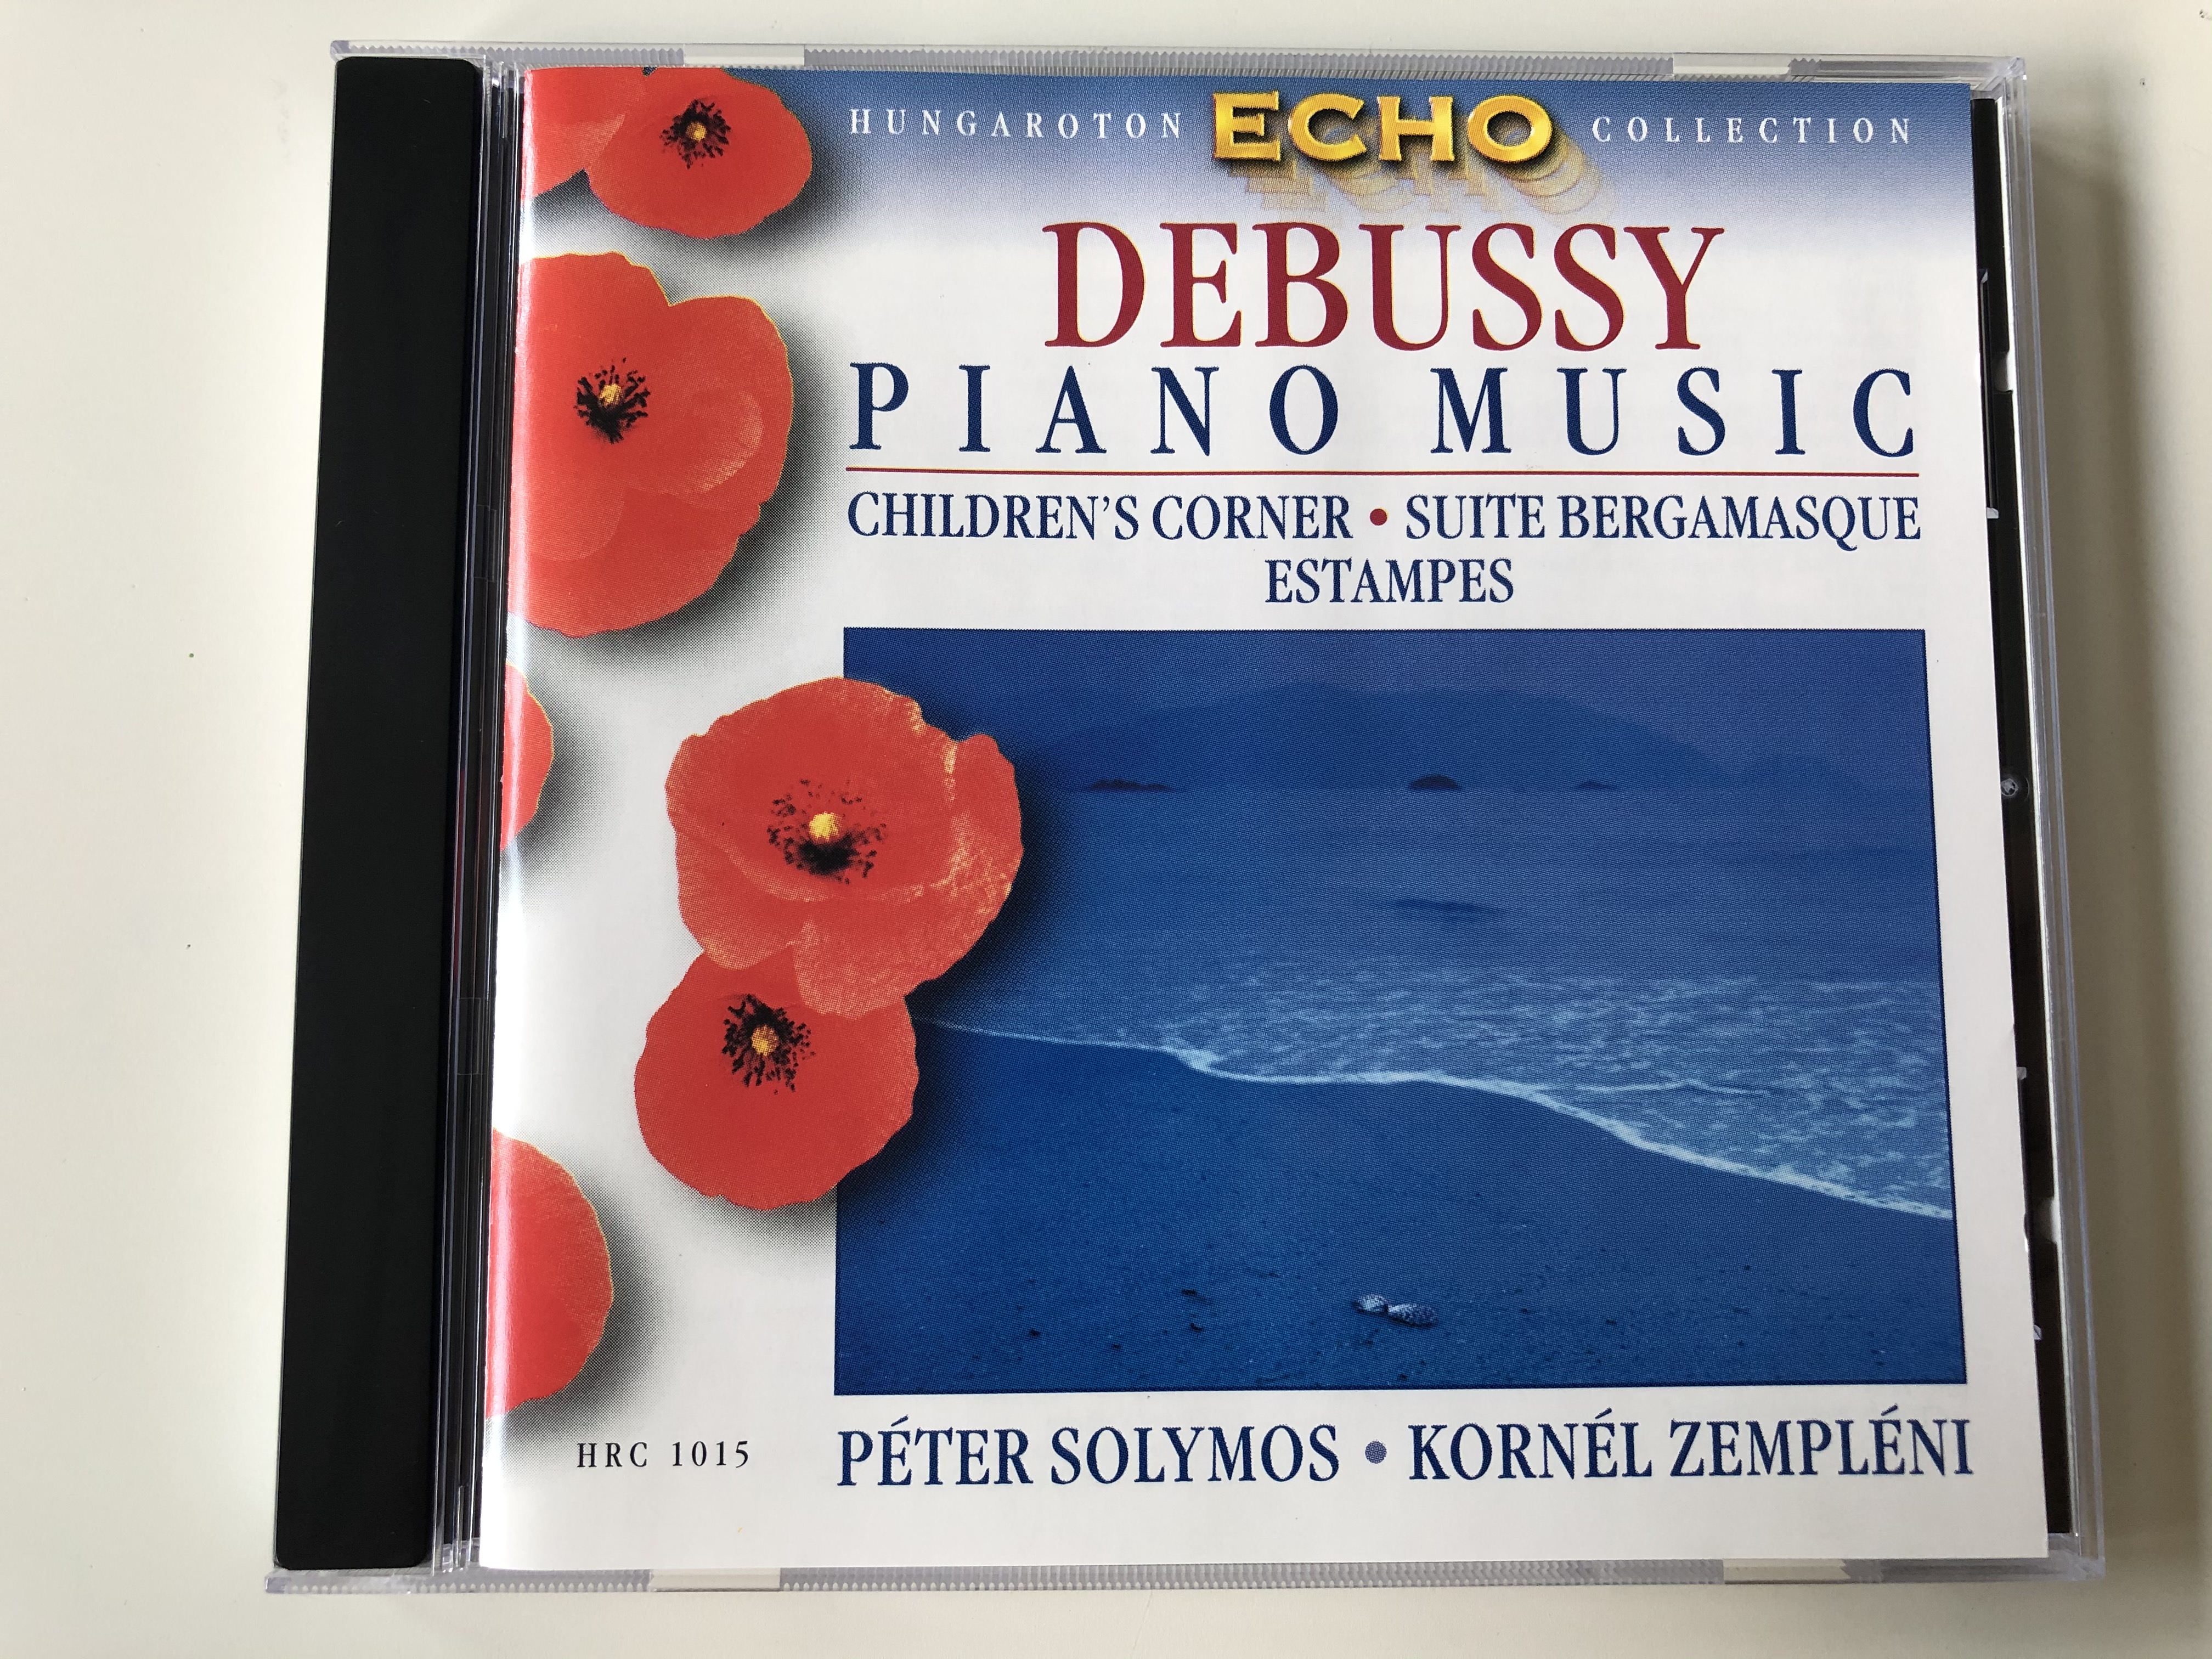 debussy-piano-music-children-s-corner-suite-bergamasque-estampes-p-ter-solymos-korn-l-zempl-ni-hungaroton-classic-audio-cd-1999-stereo-hrc-1015-1-.jpg